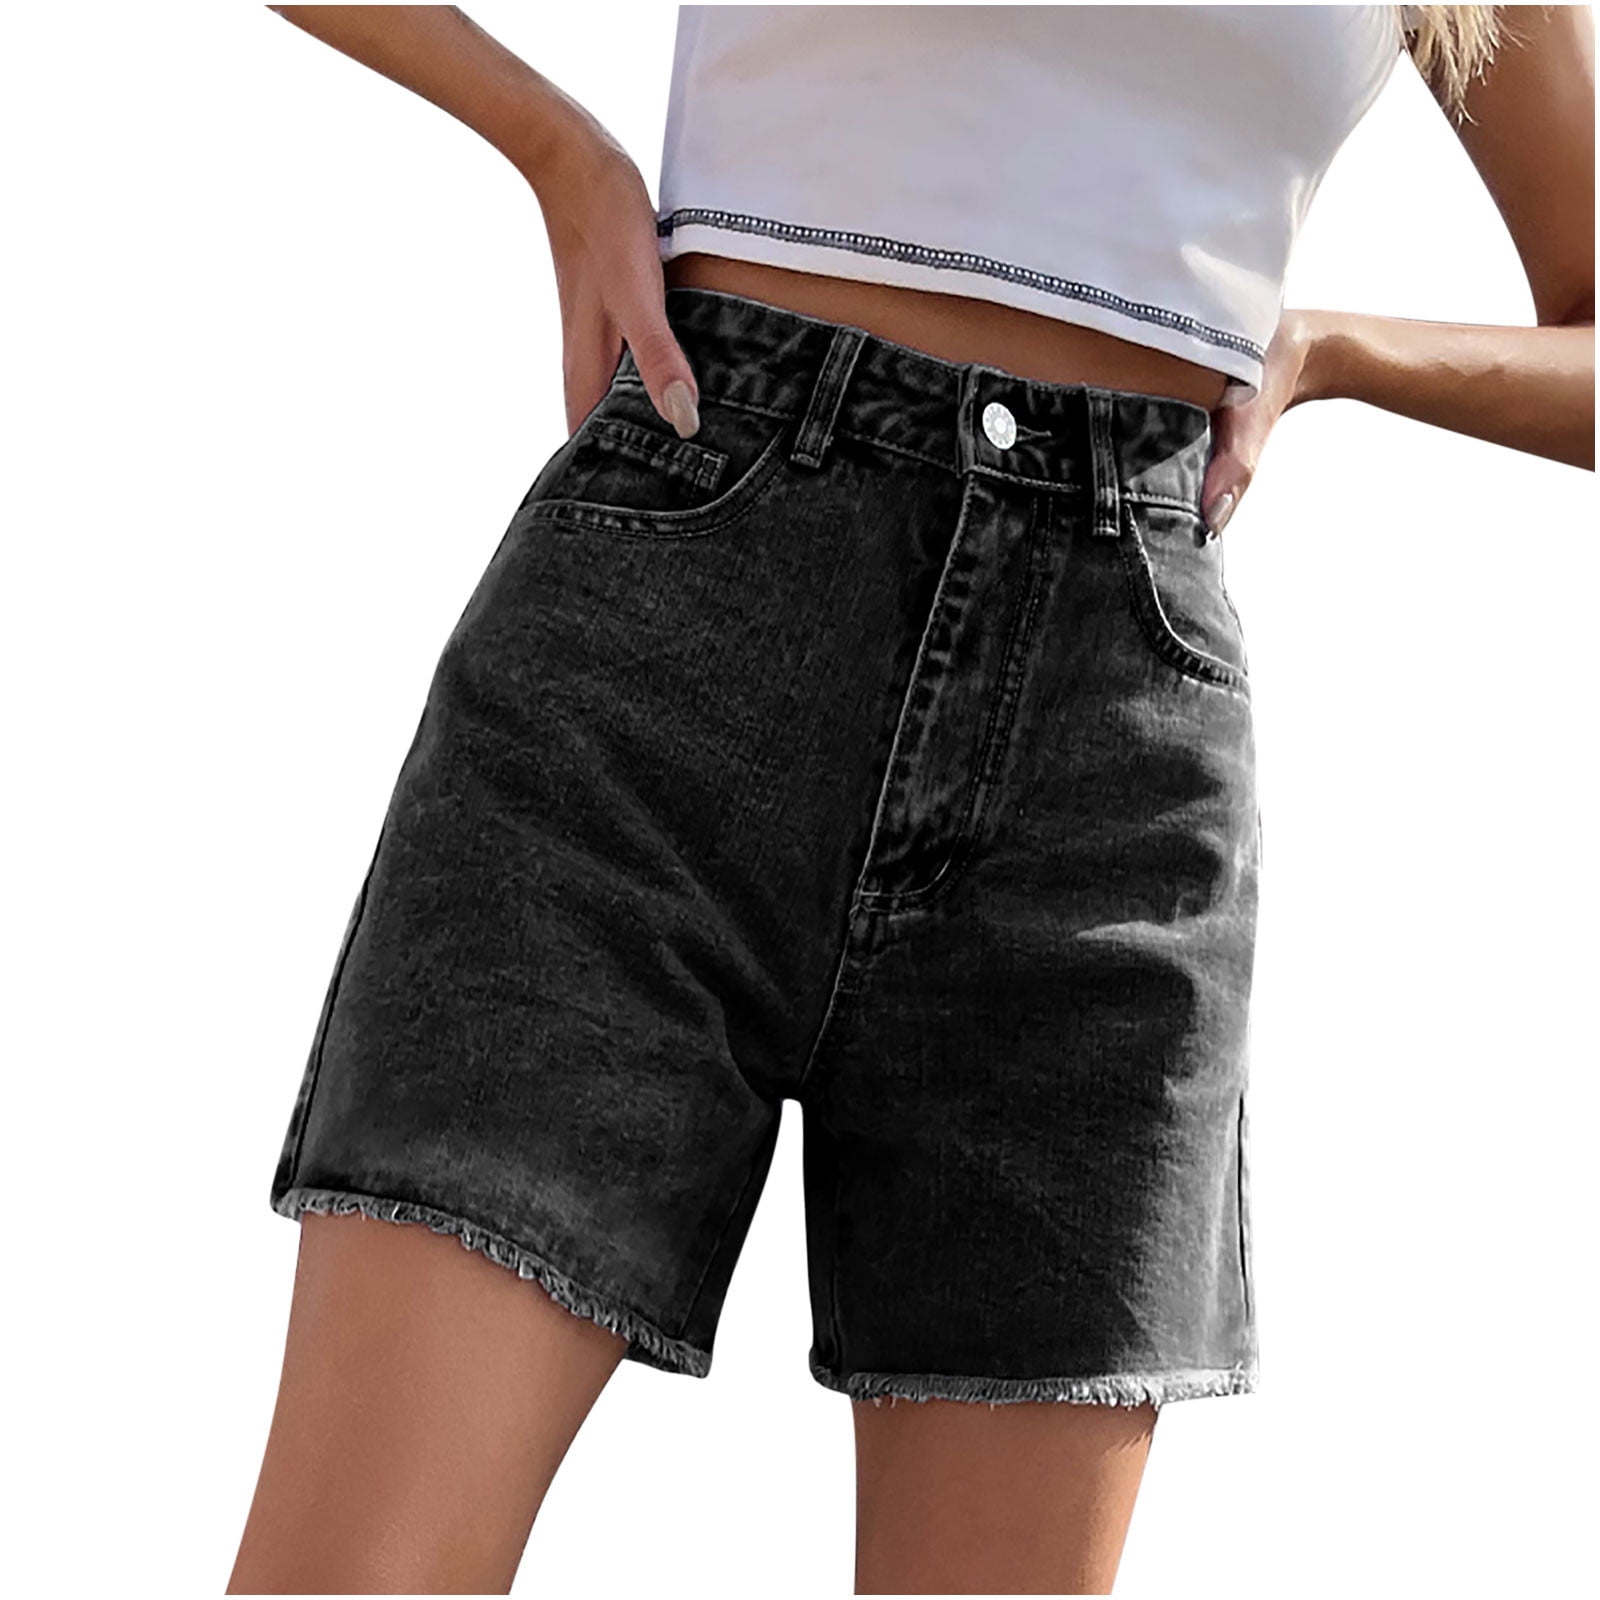 Belity Women's Denim Short Jeans Hot Pants (Black, 27) : Amazon.in:  Clothing & Accessories